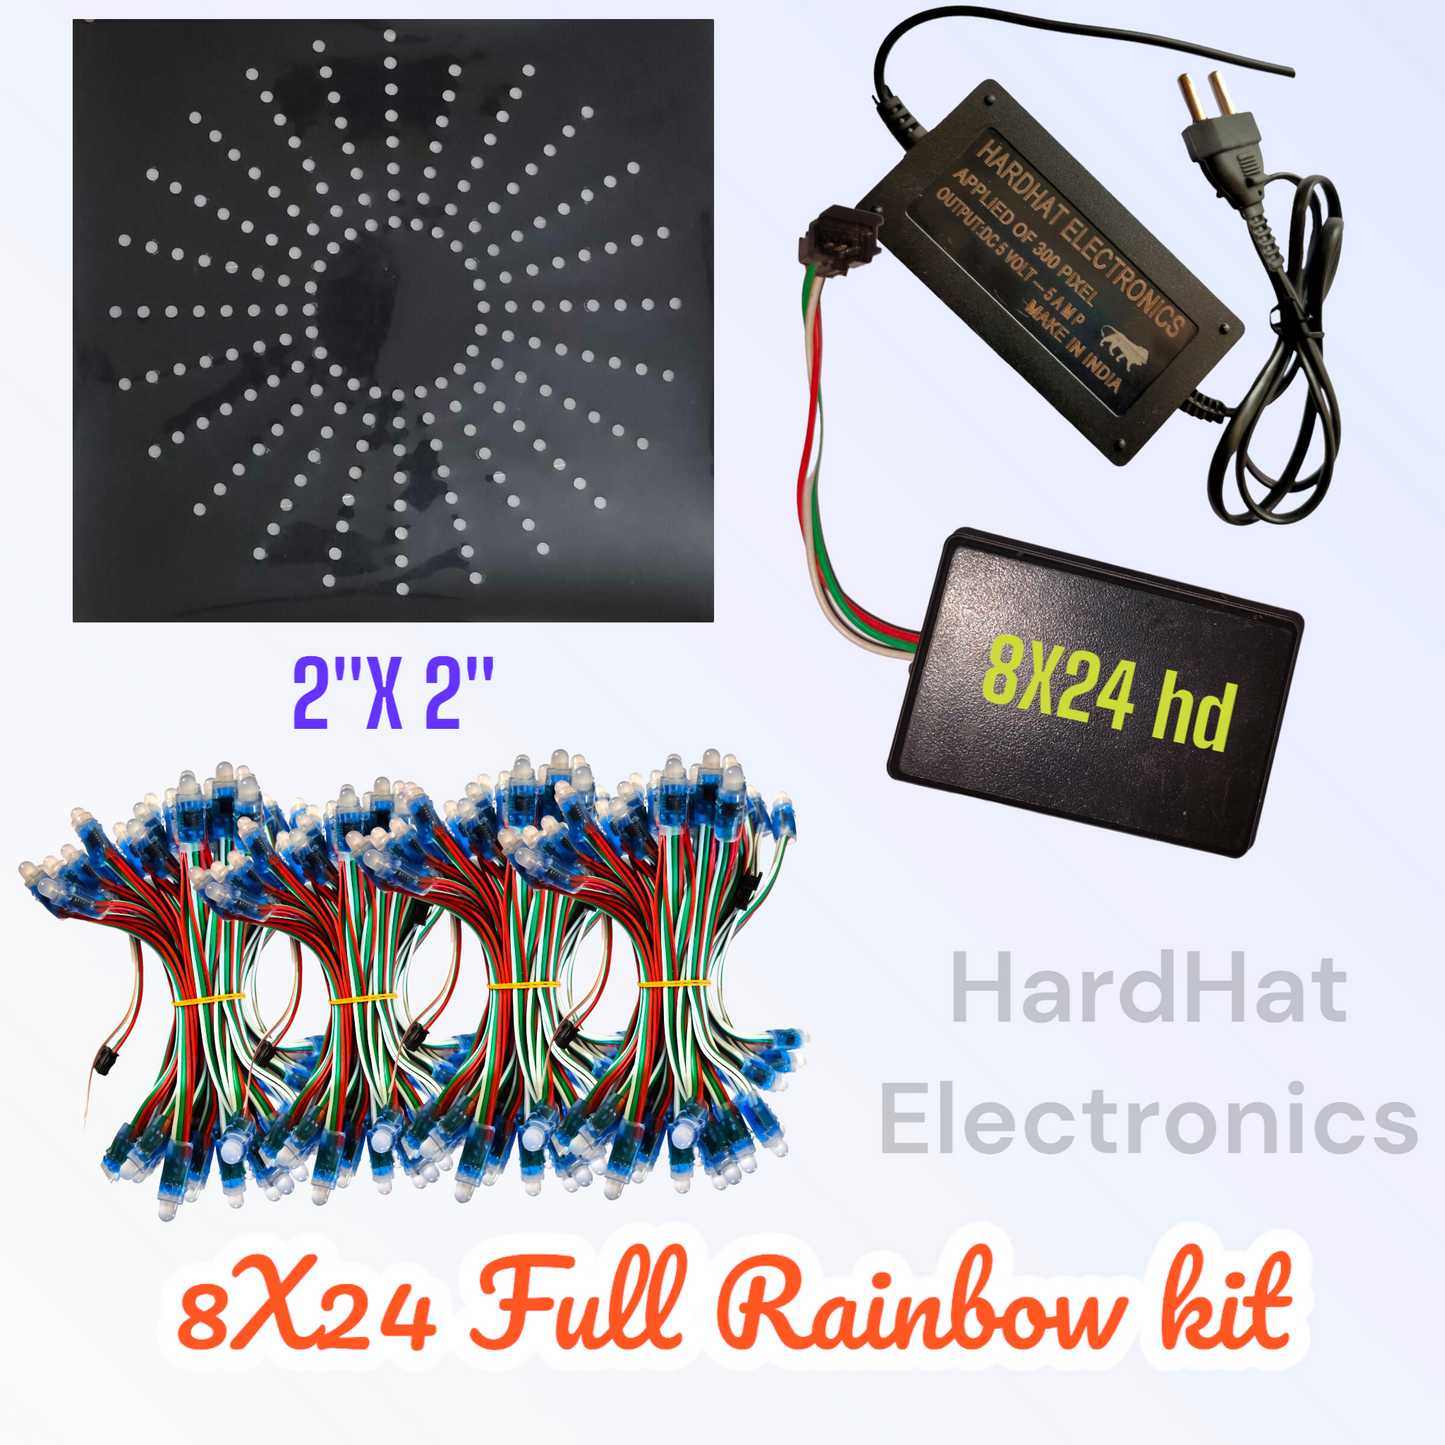 8 X 24 Full Rainbow Kit